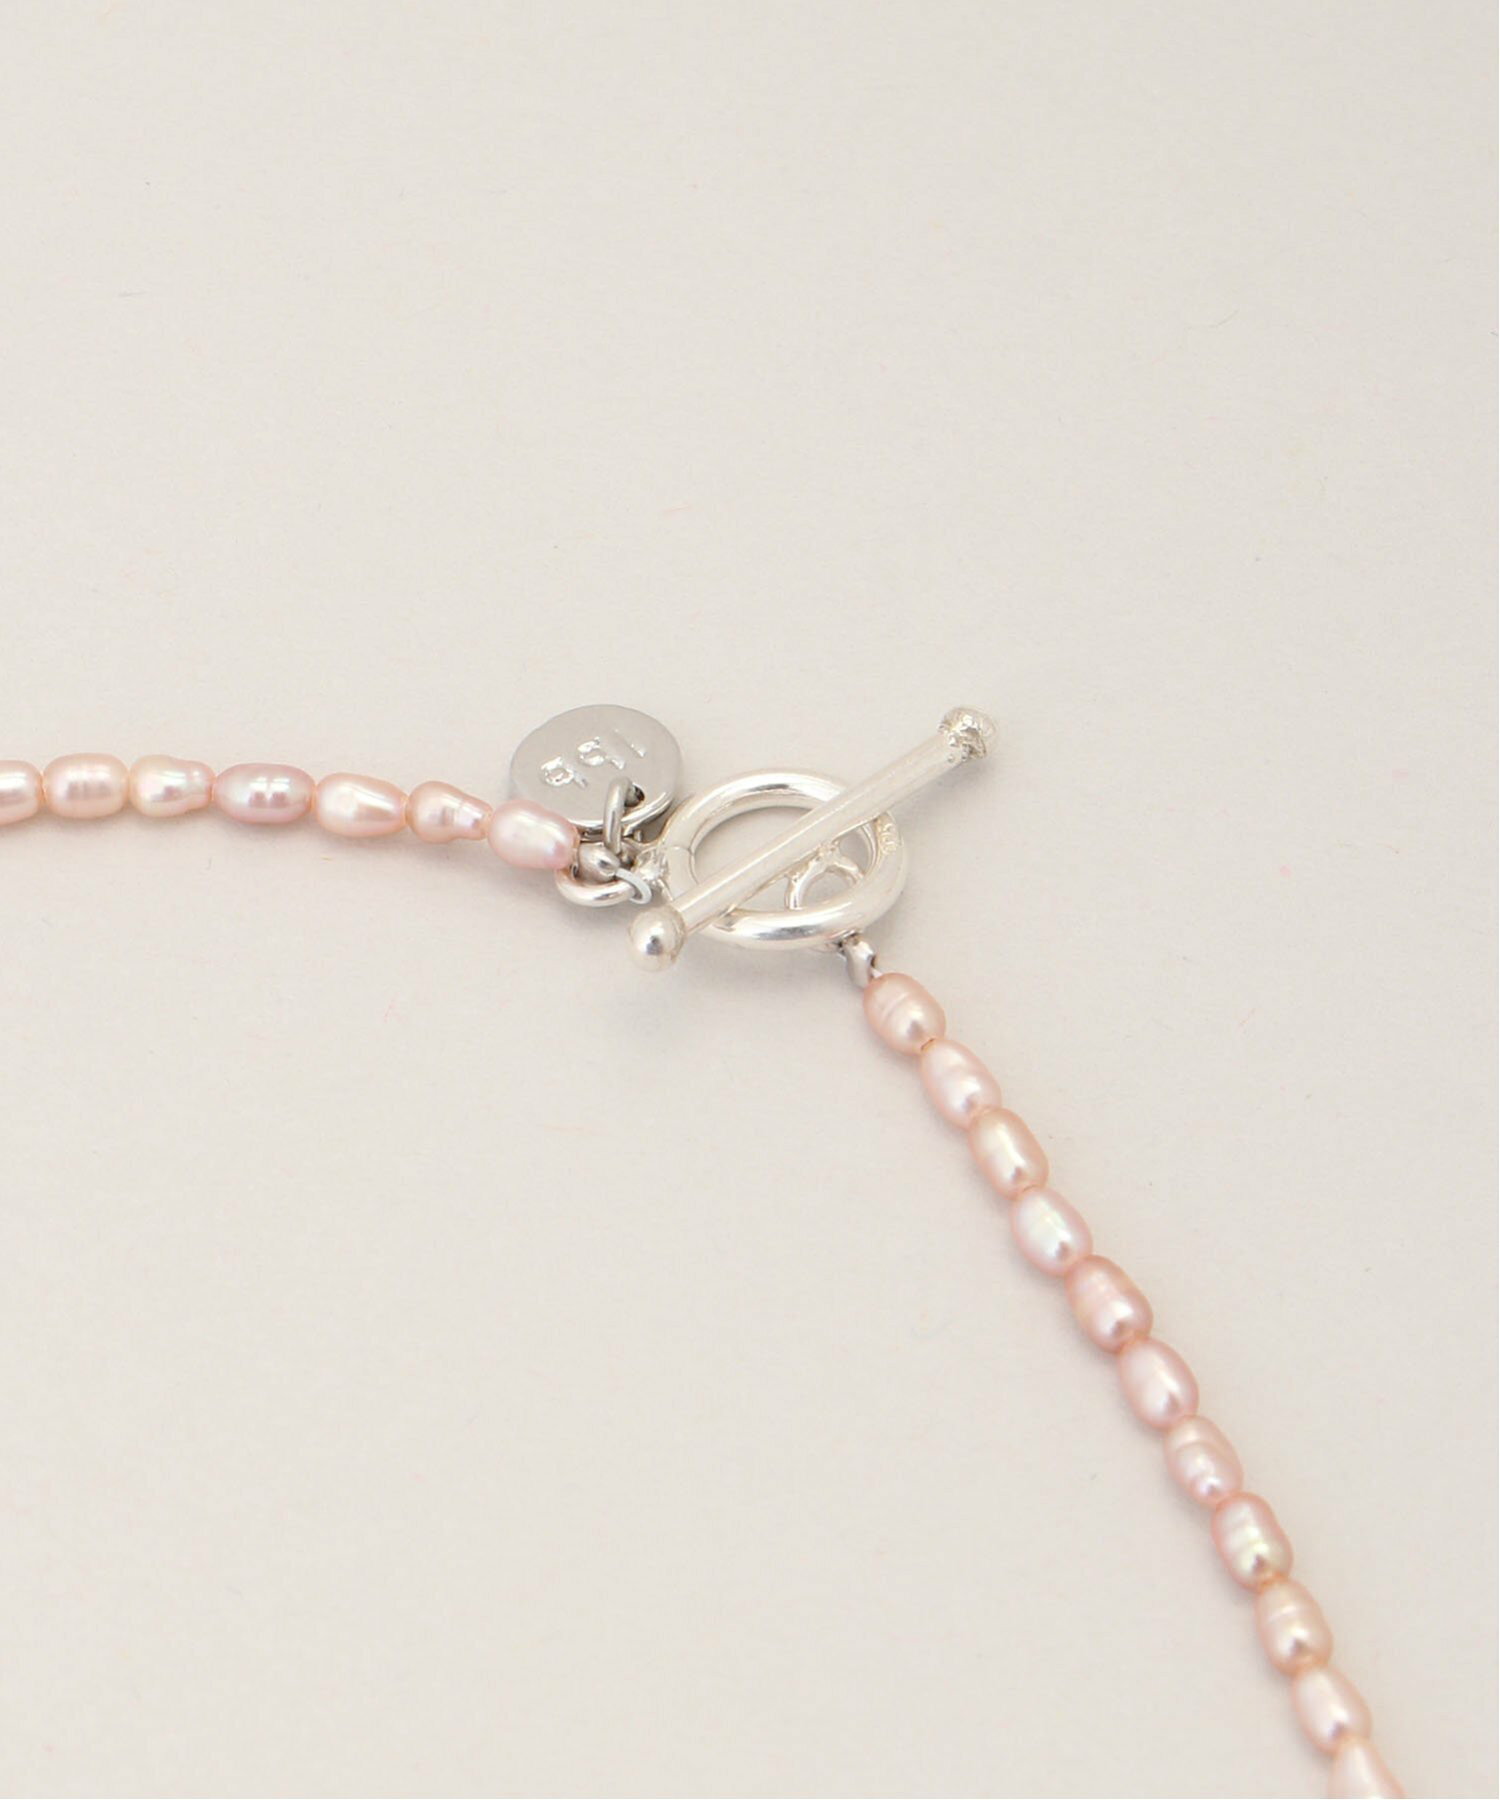 les bon bon/rose pearl choker ローズ パール チョーカー 淡水パール チョーカー ネックレス 日本製 MADE IN JAPAN ジュエリー ギフト ルボンボン